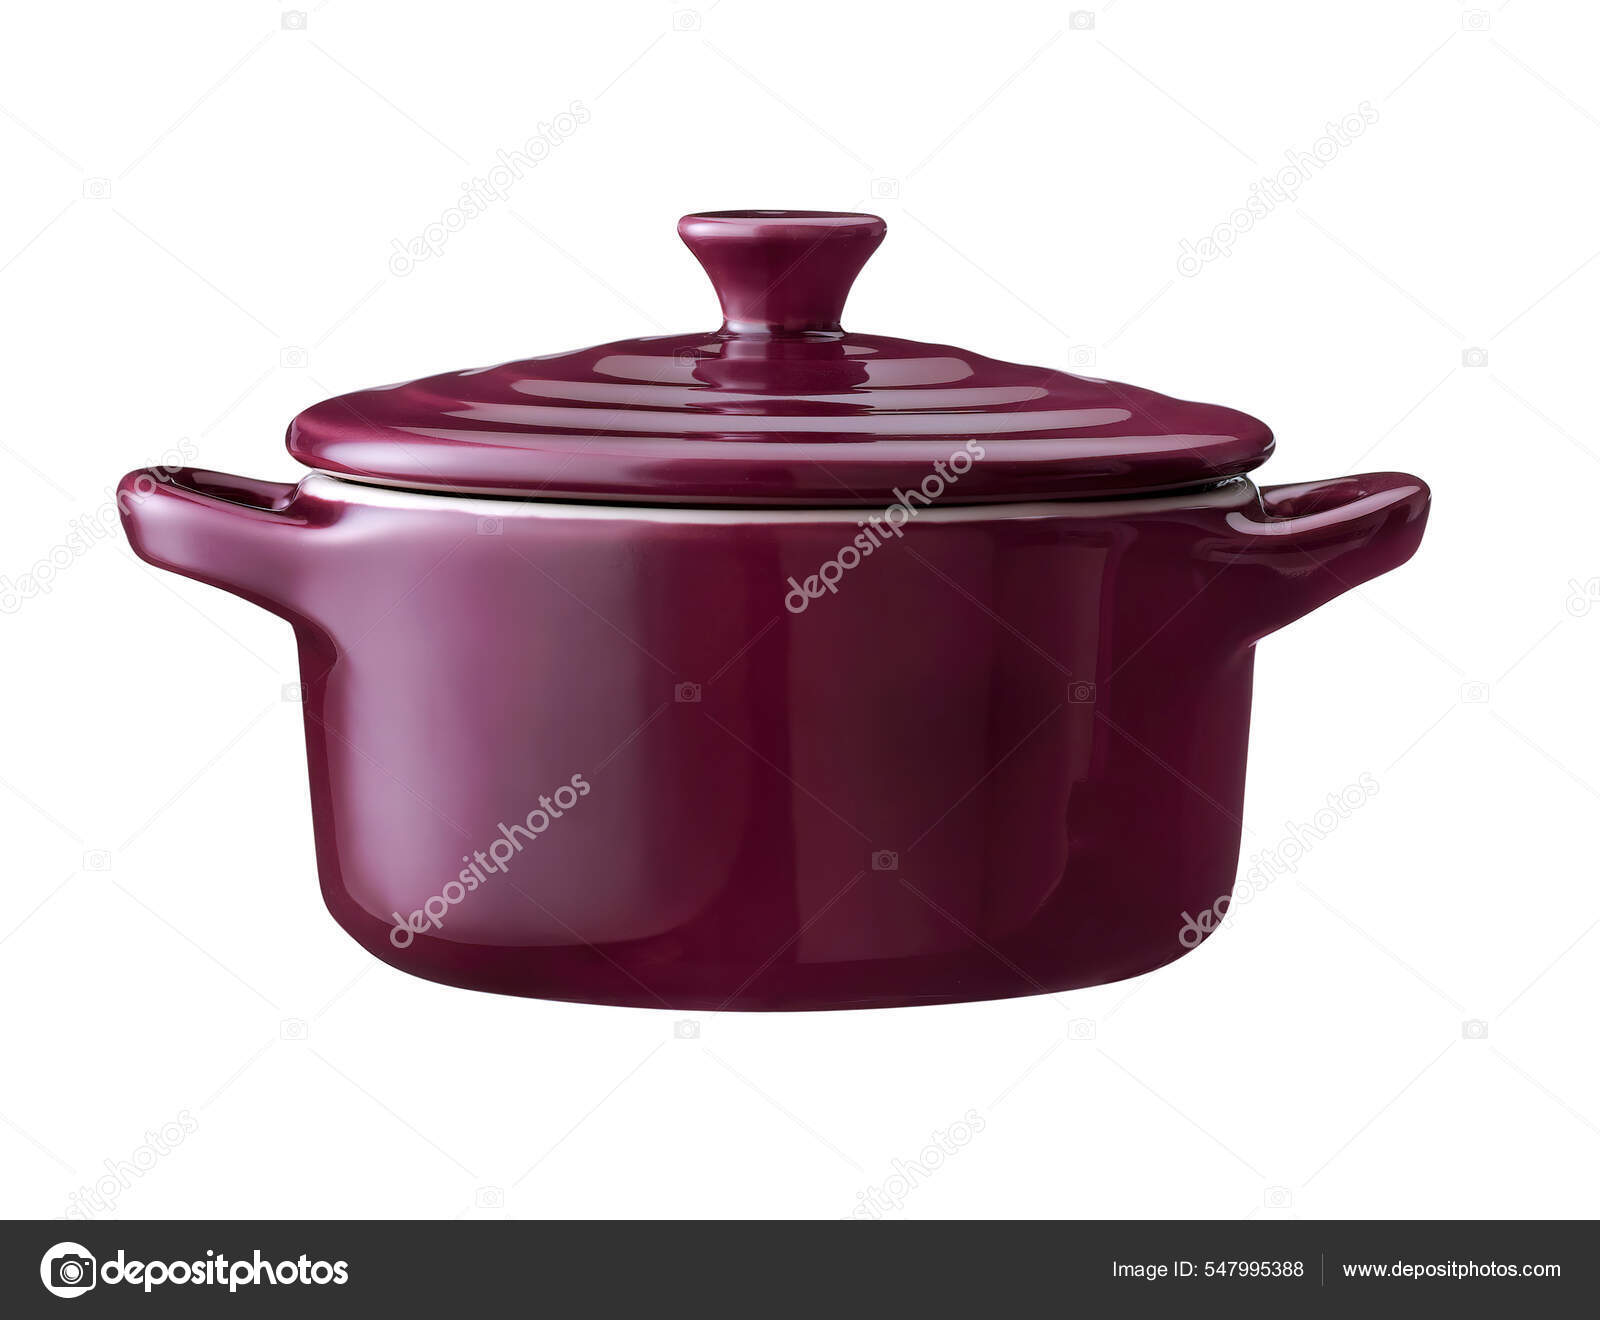 https://st.depositphotos.com/4826769/54799/i/1600/depositphotos_547995388-stock-photo-purple-cast-iron-enamel-frying.jpg